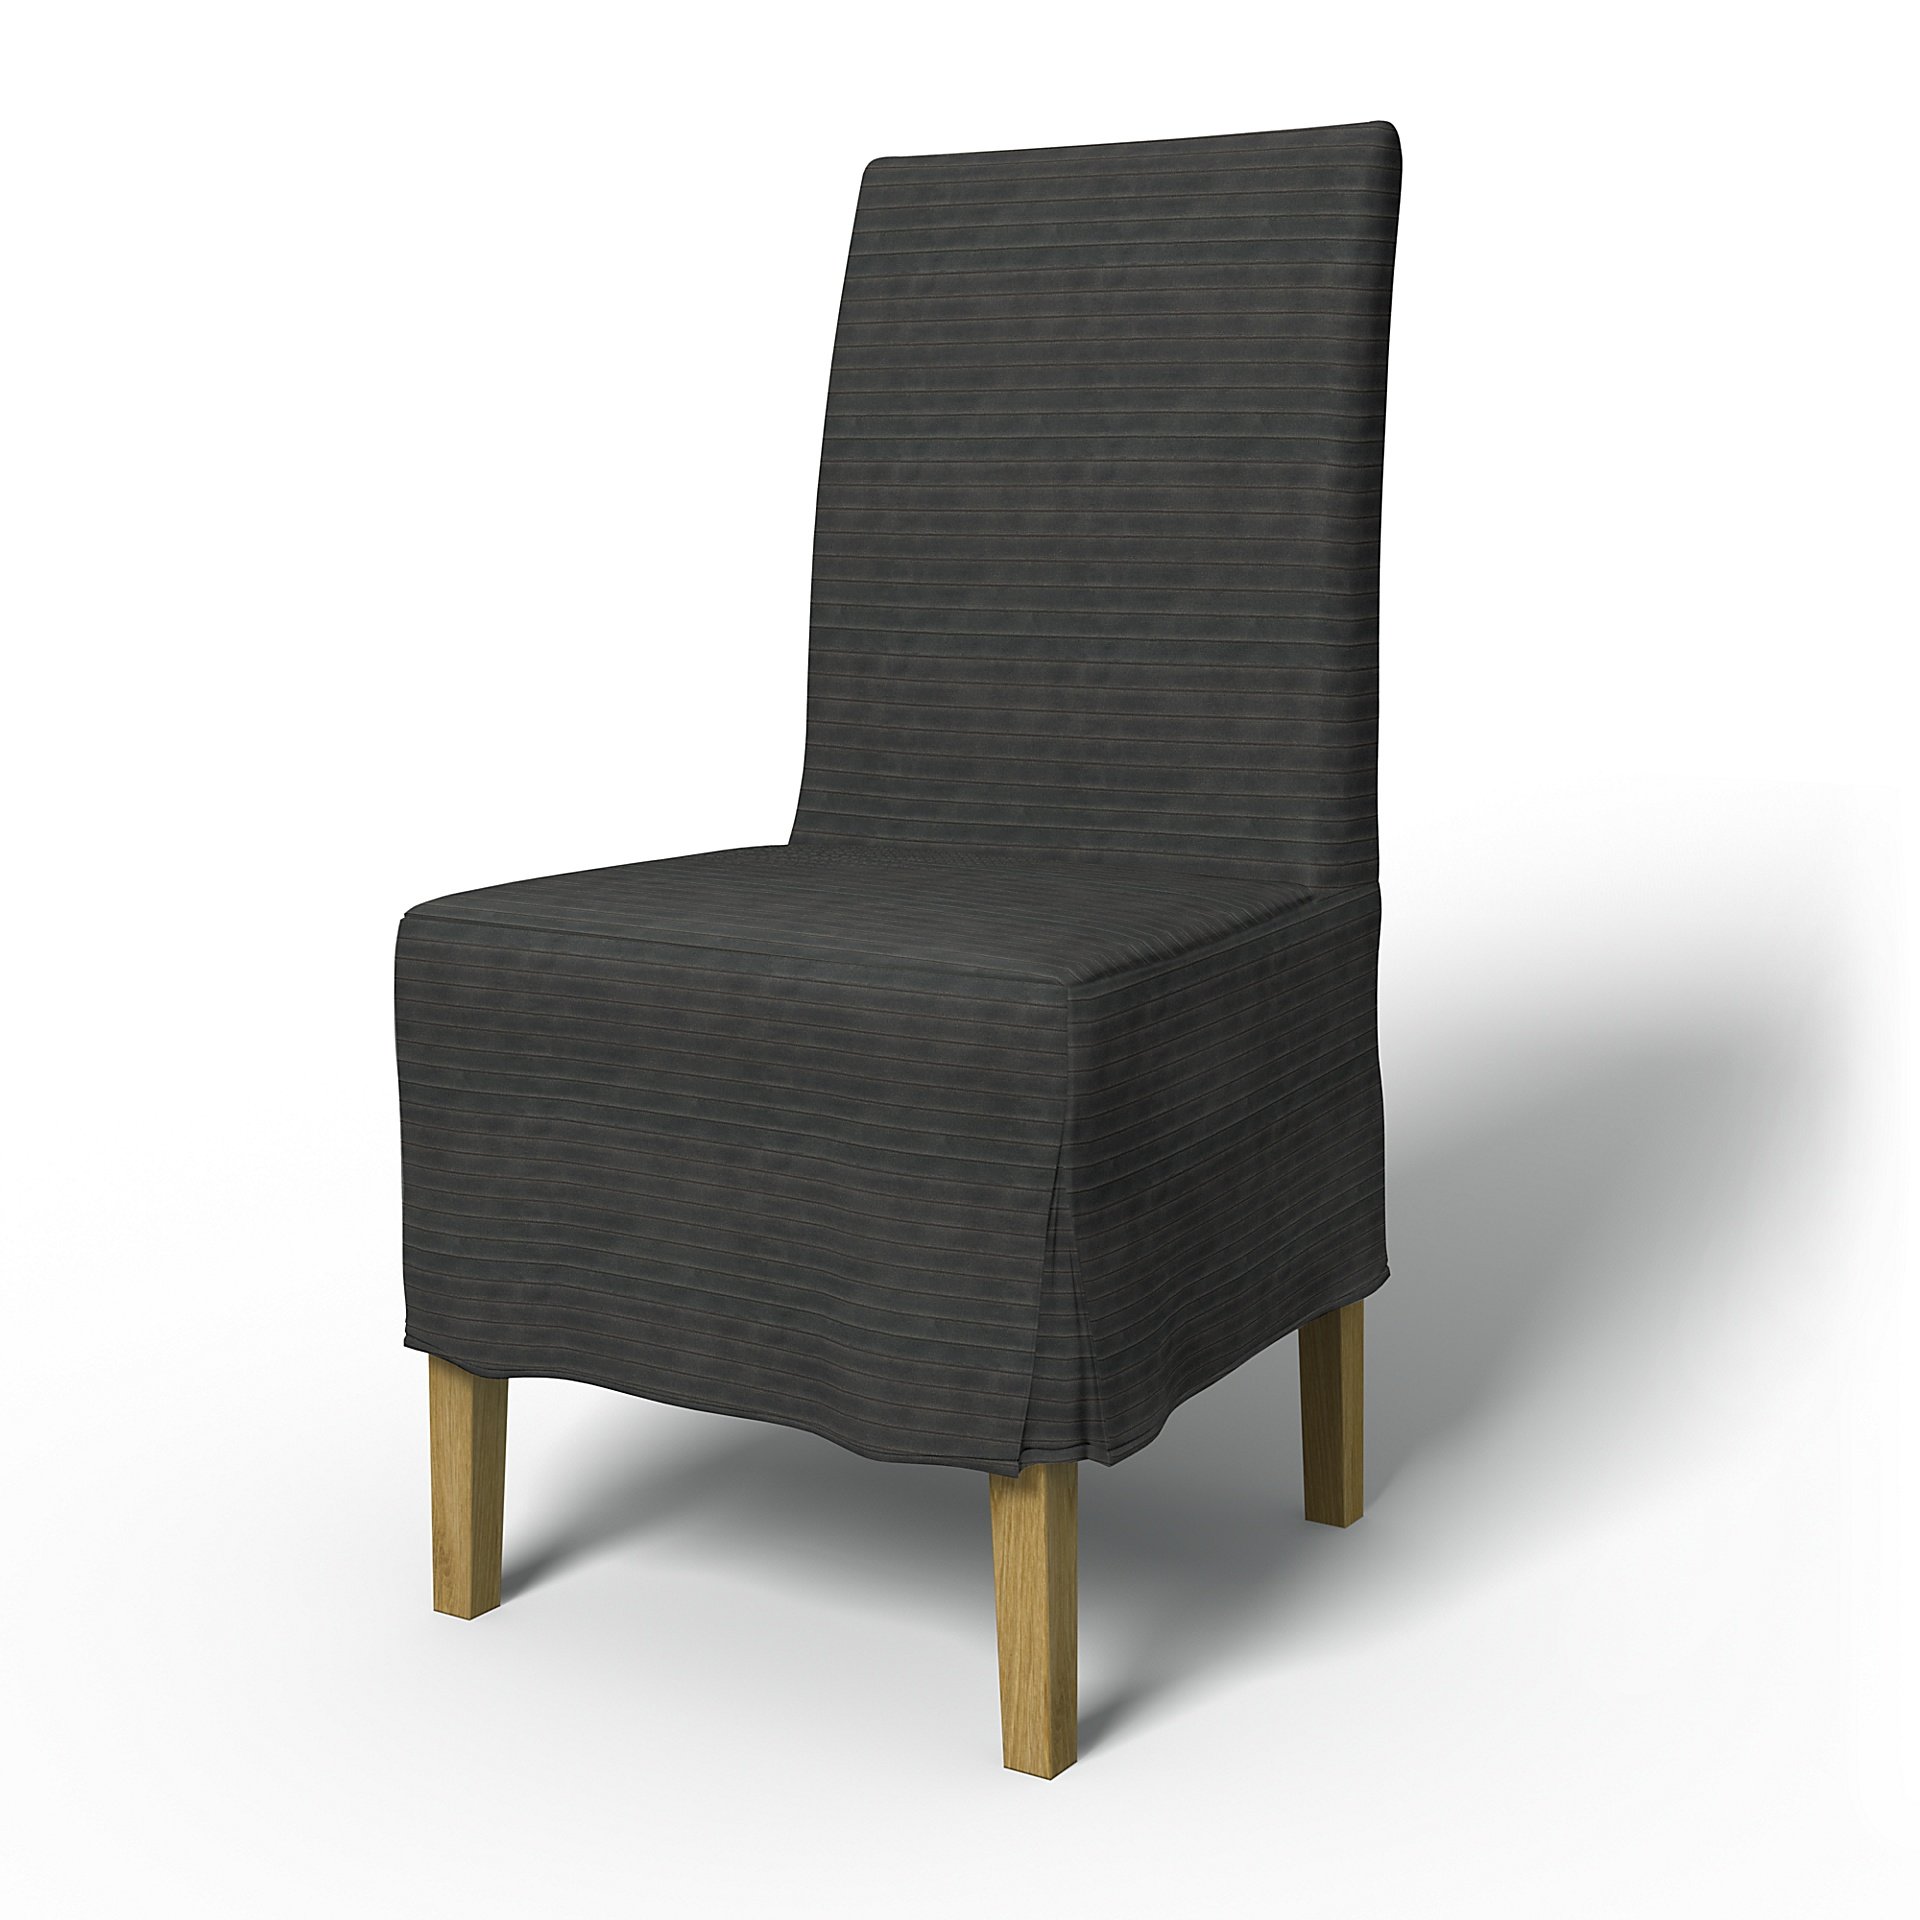 IKEA - Henriksdal Dining Chair Cover Medium skirt with Box Pleat (Standard model), Licorice, Corduro